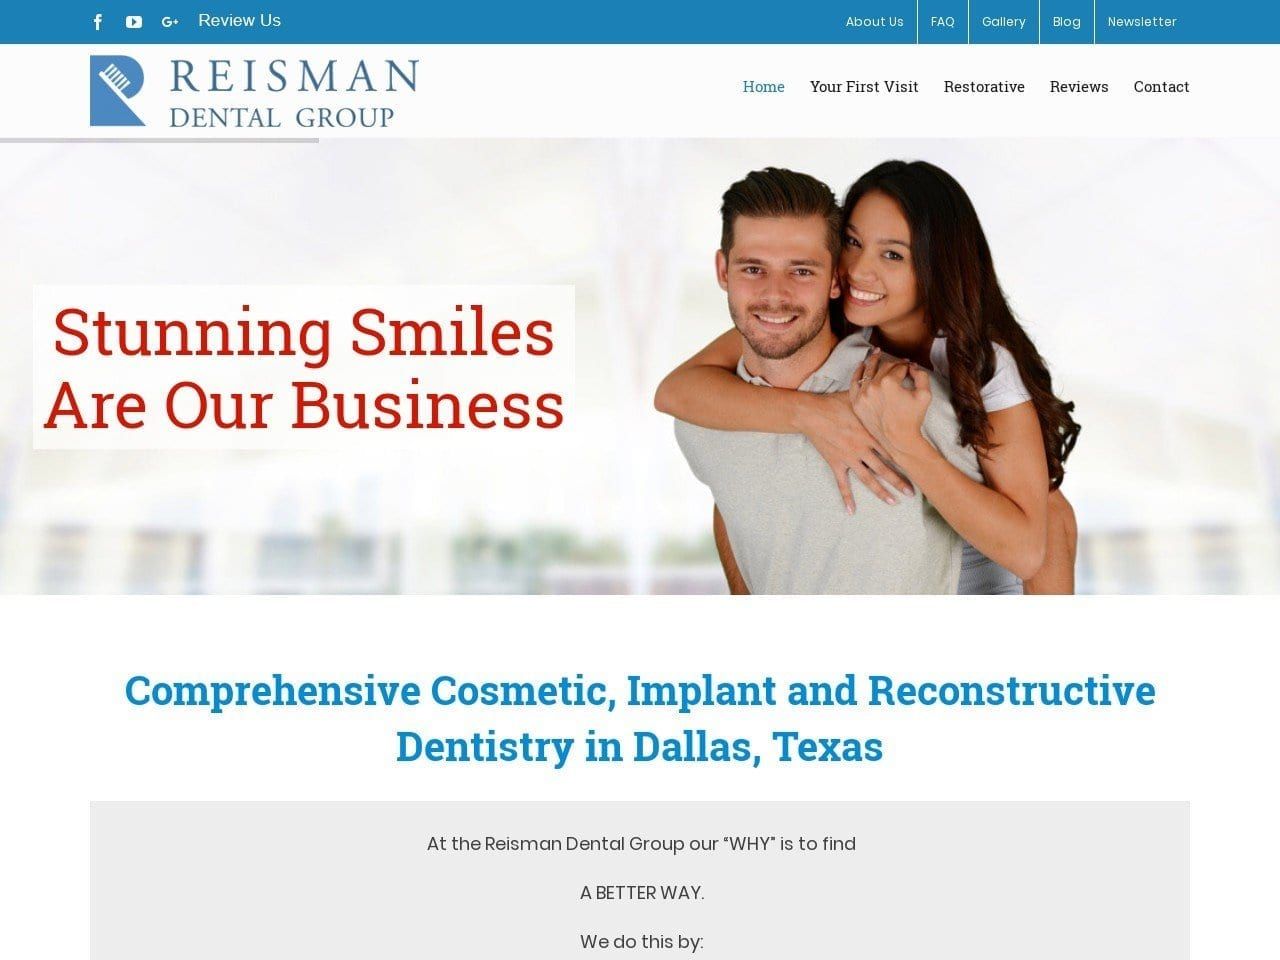 Reisman Dental Group Website Screenshot from reismandentalgroup.com